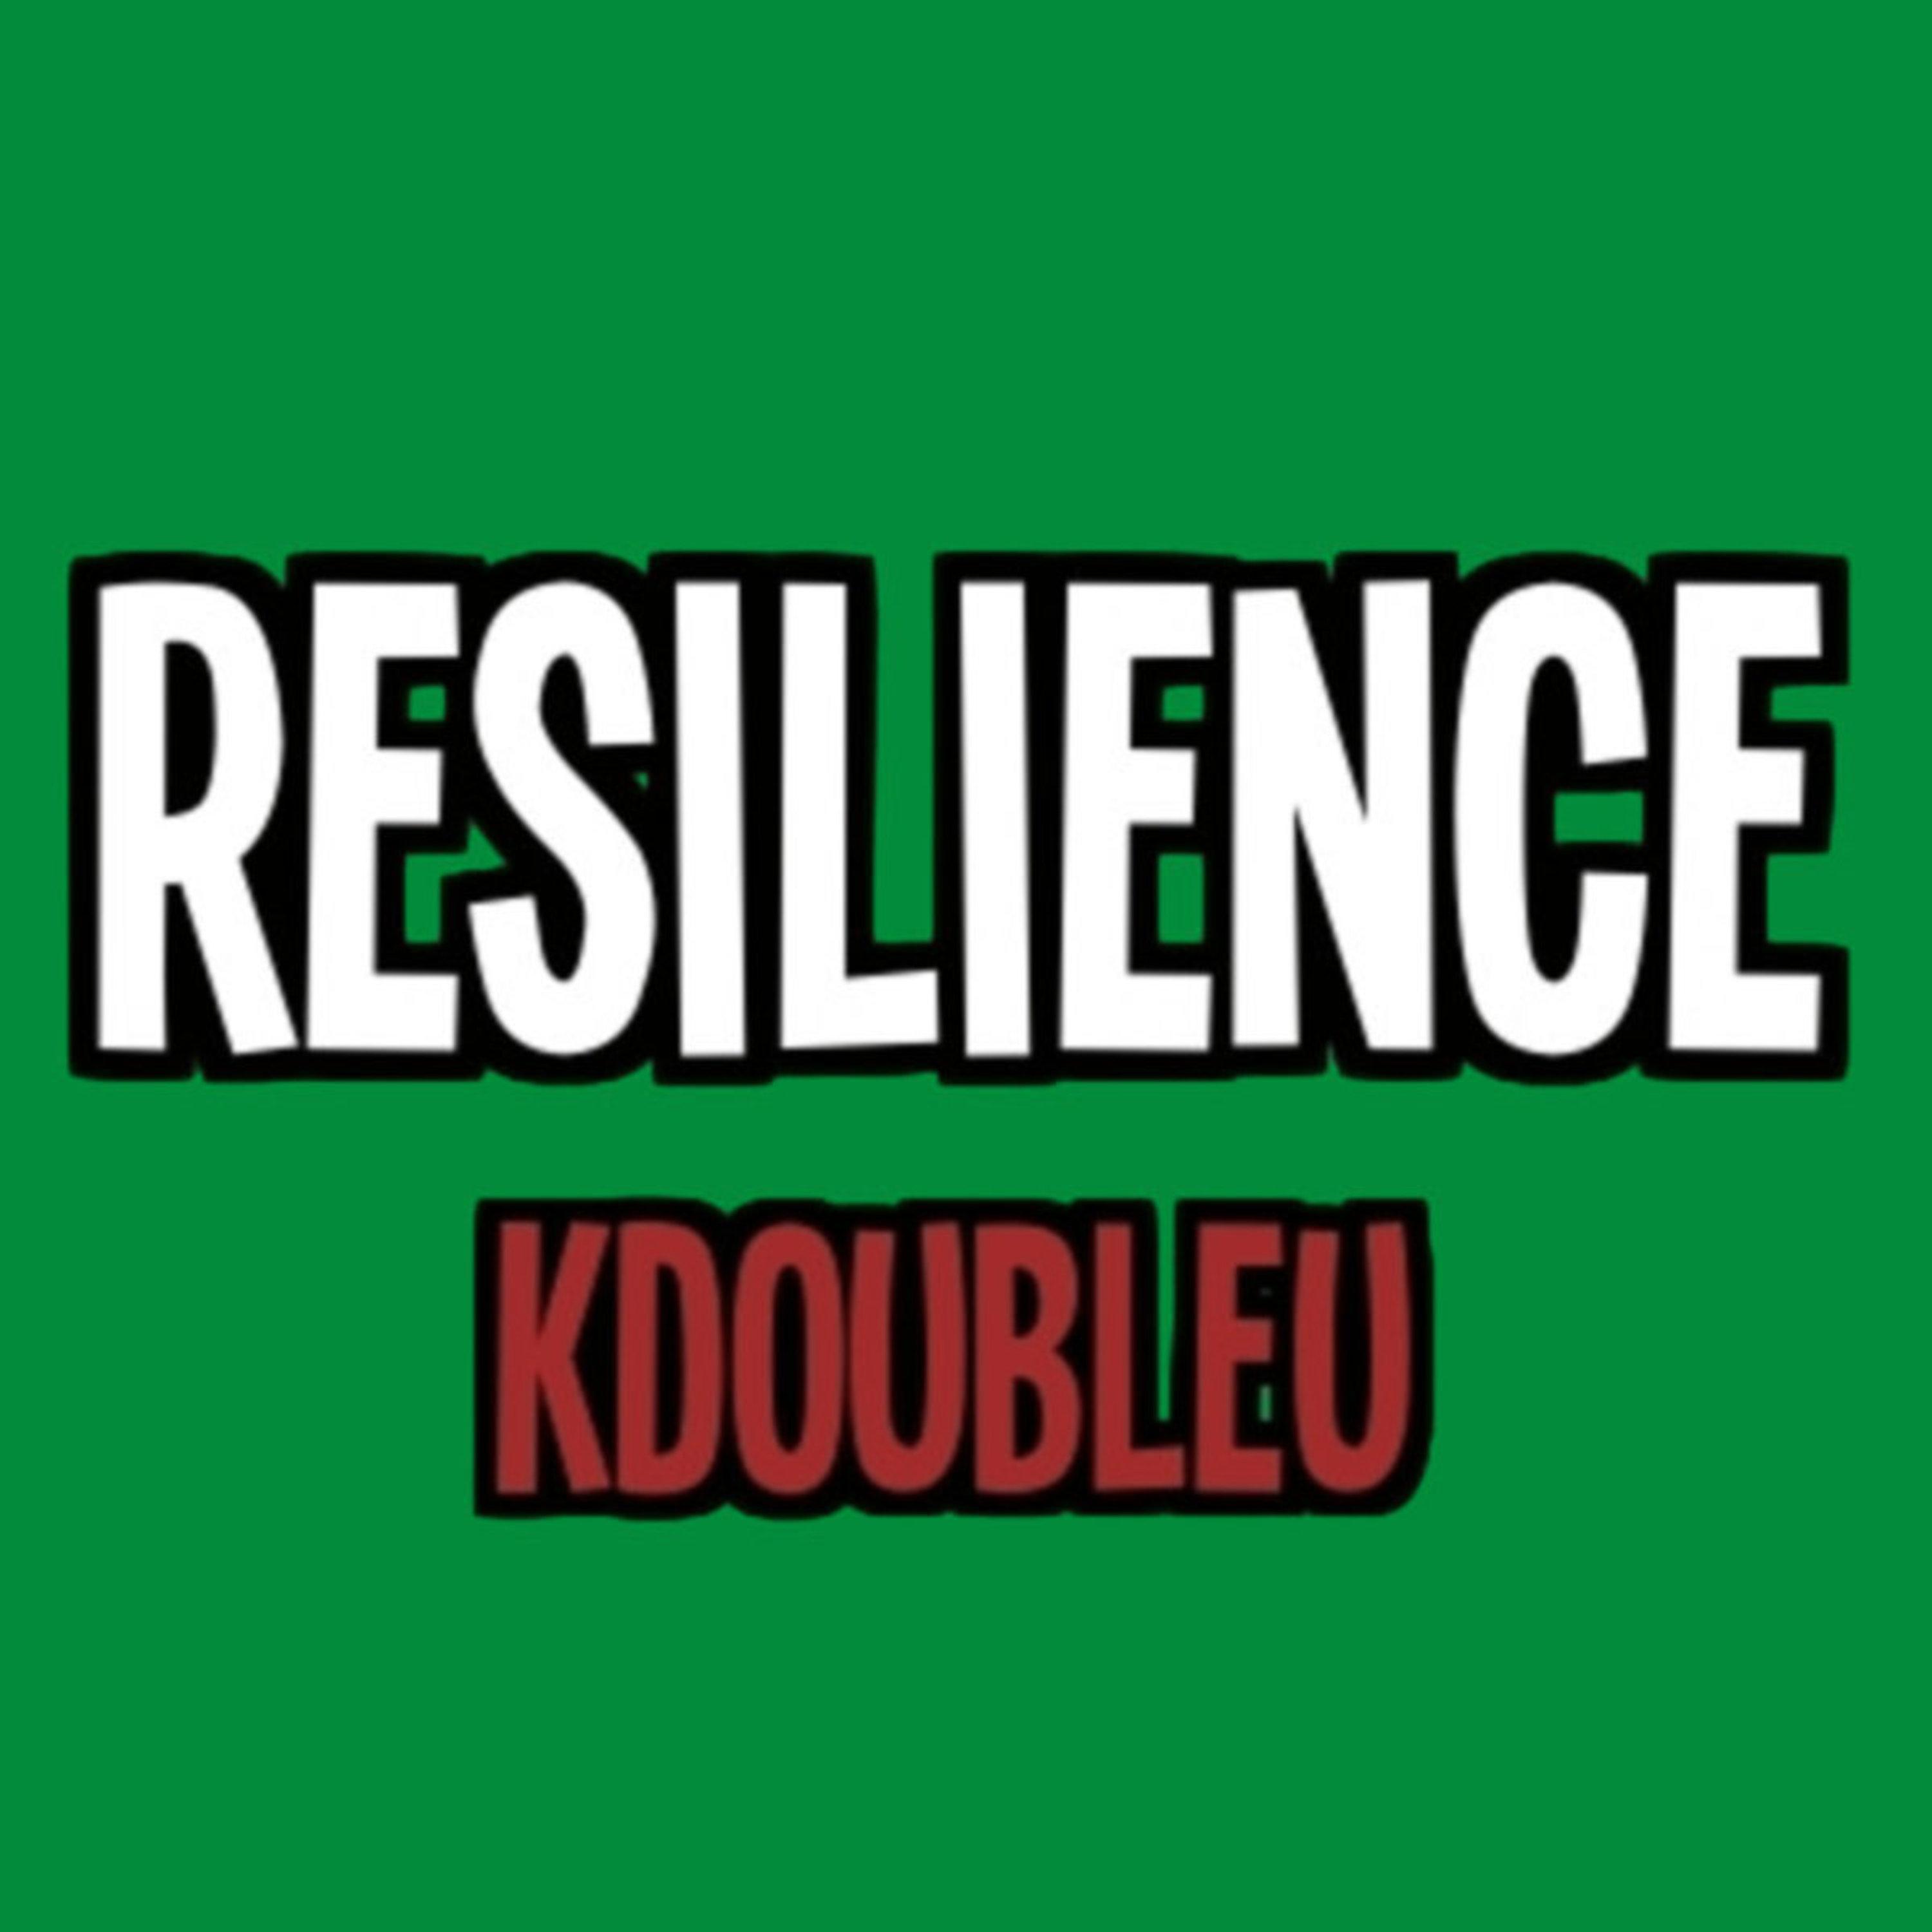 KDoubleU - Resilience